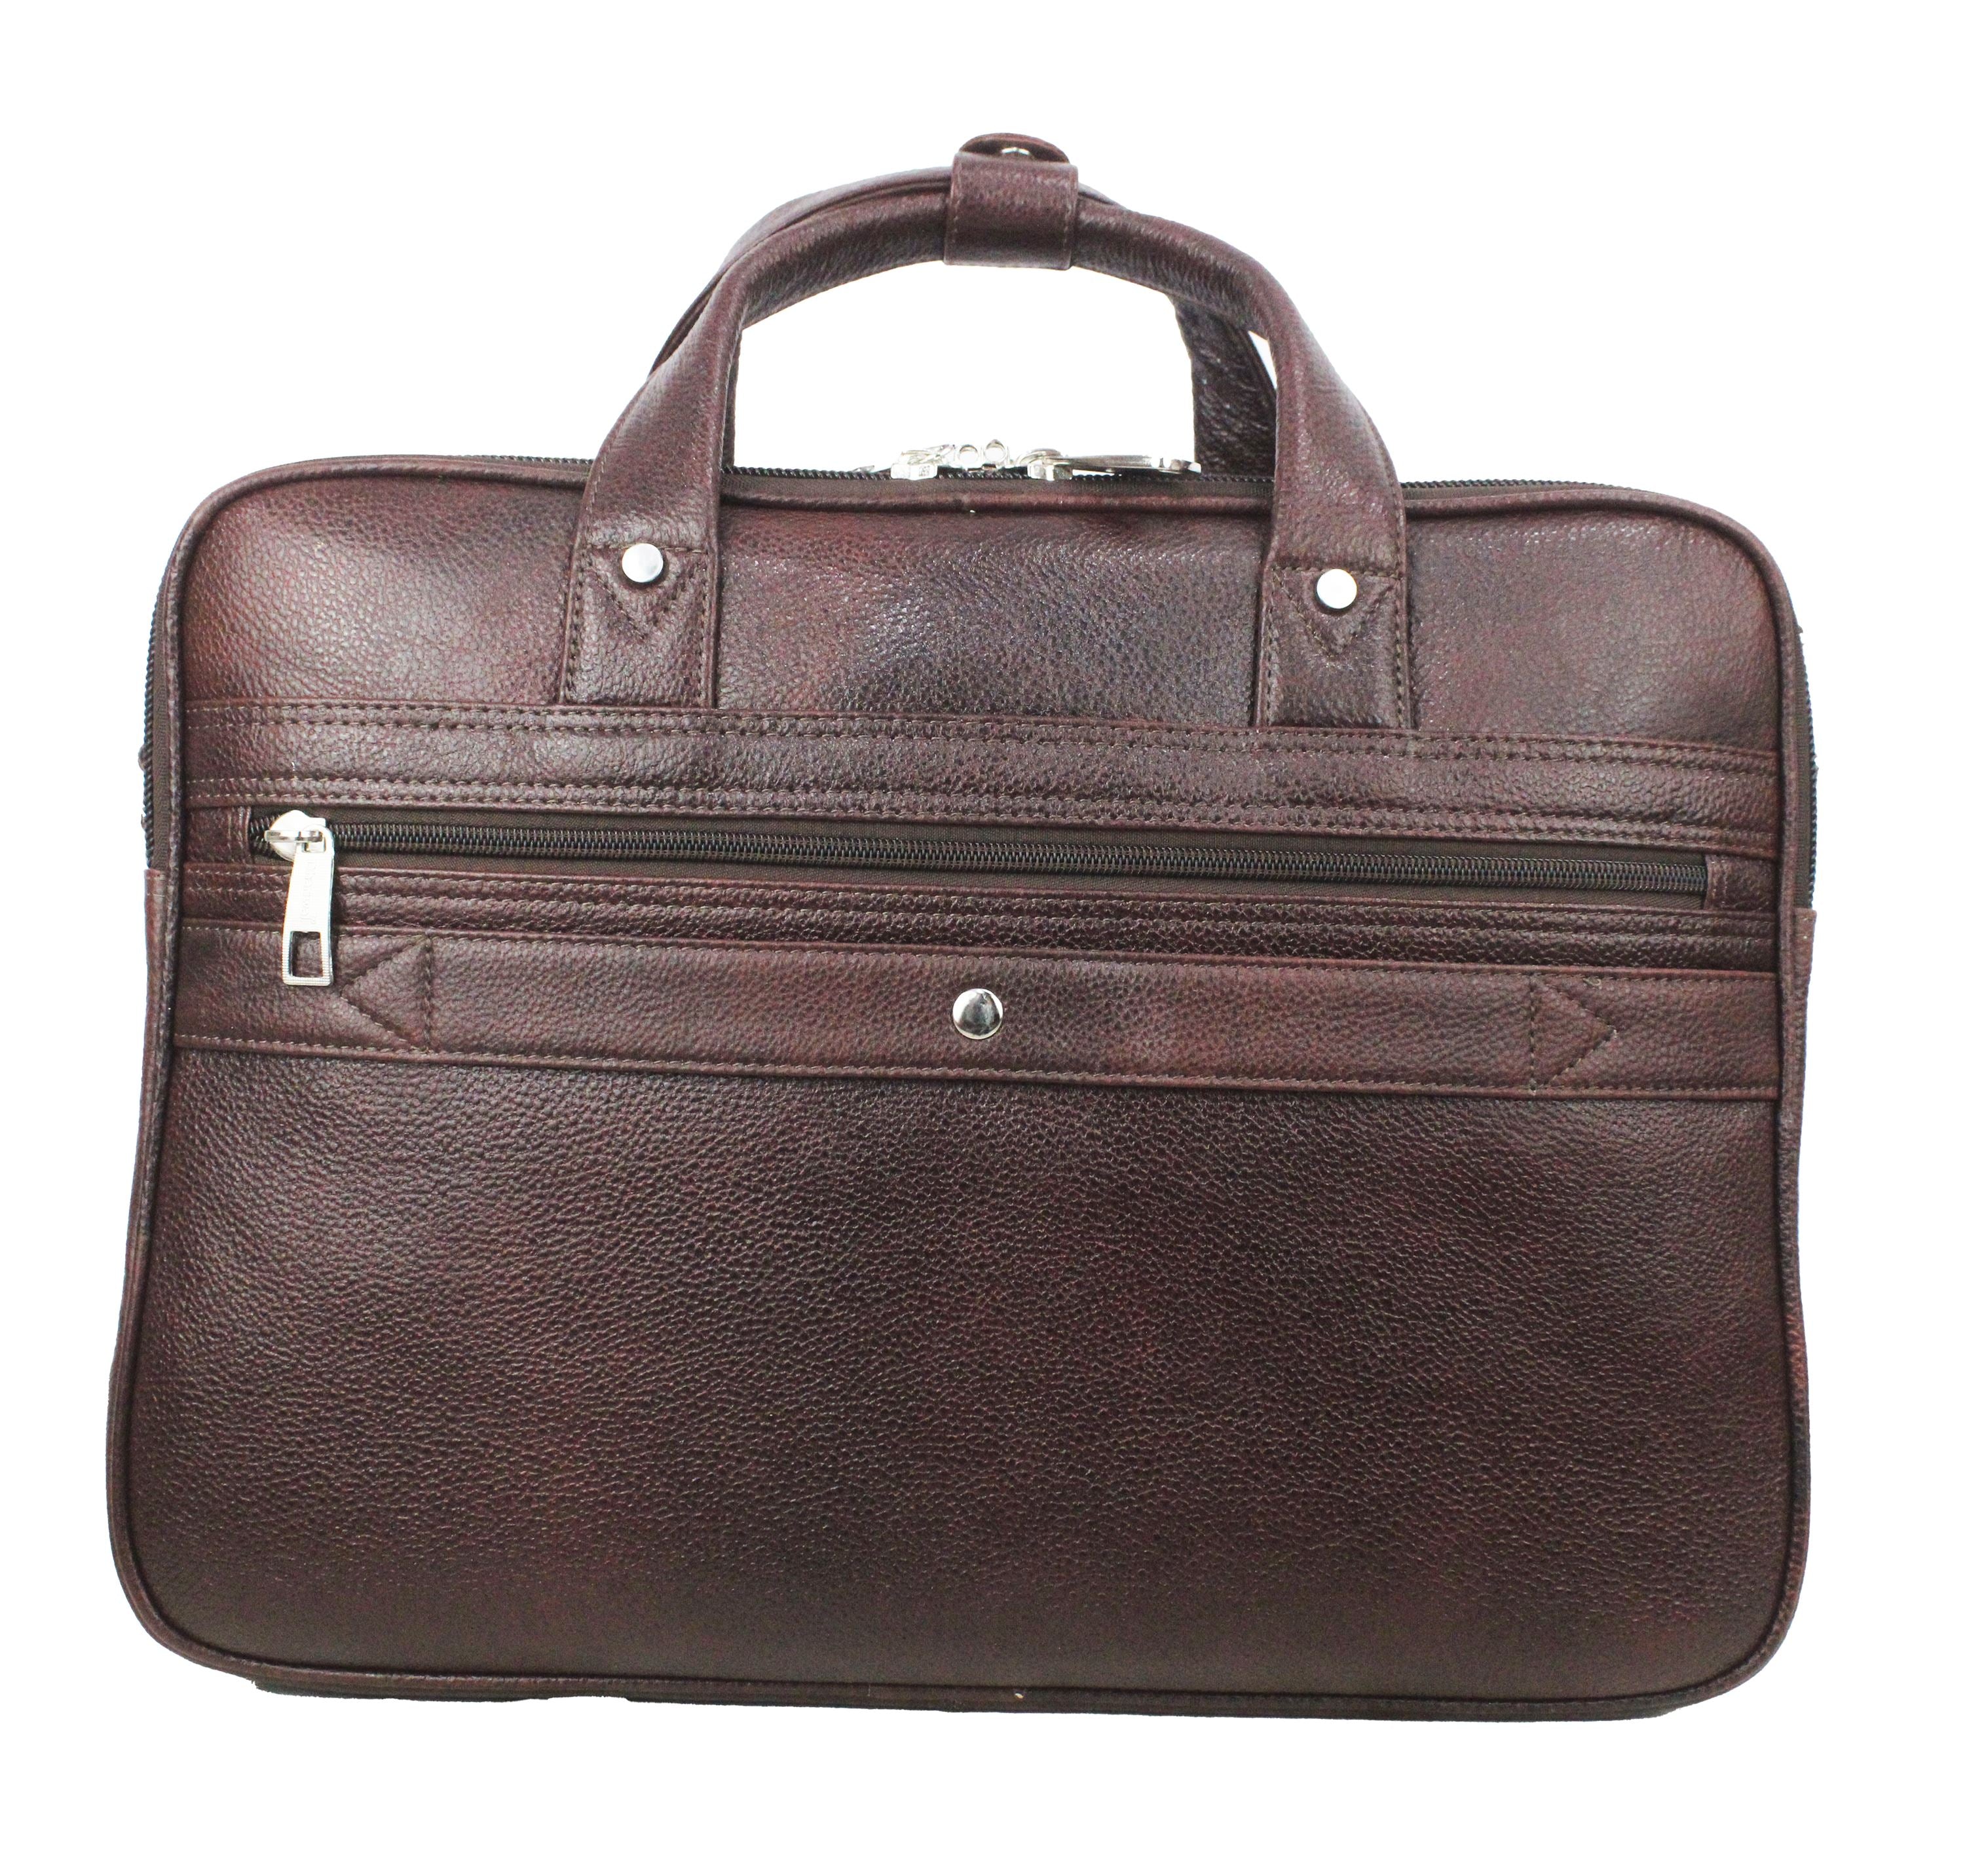 dhariwal genuine leather laptop bag file messenger bag with strap upto 17 inch laptop bag for men eb 616 executive bags dhariwal bags 132648